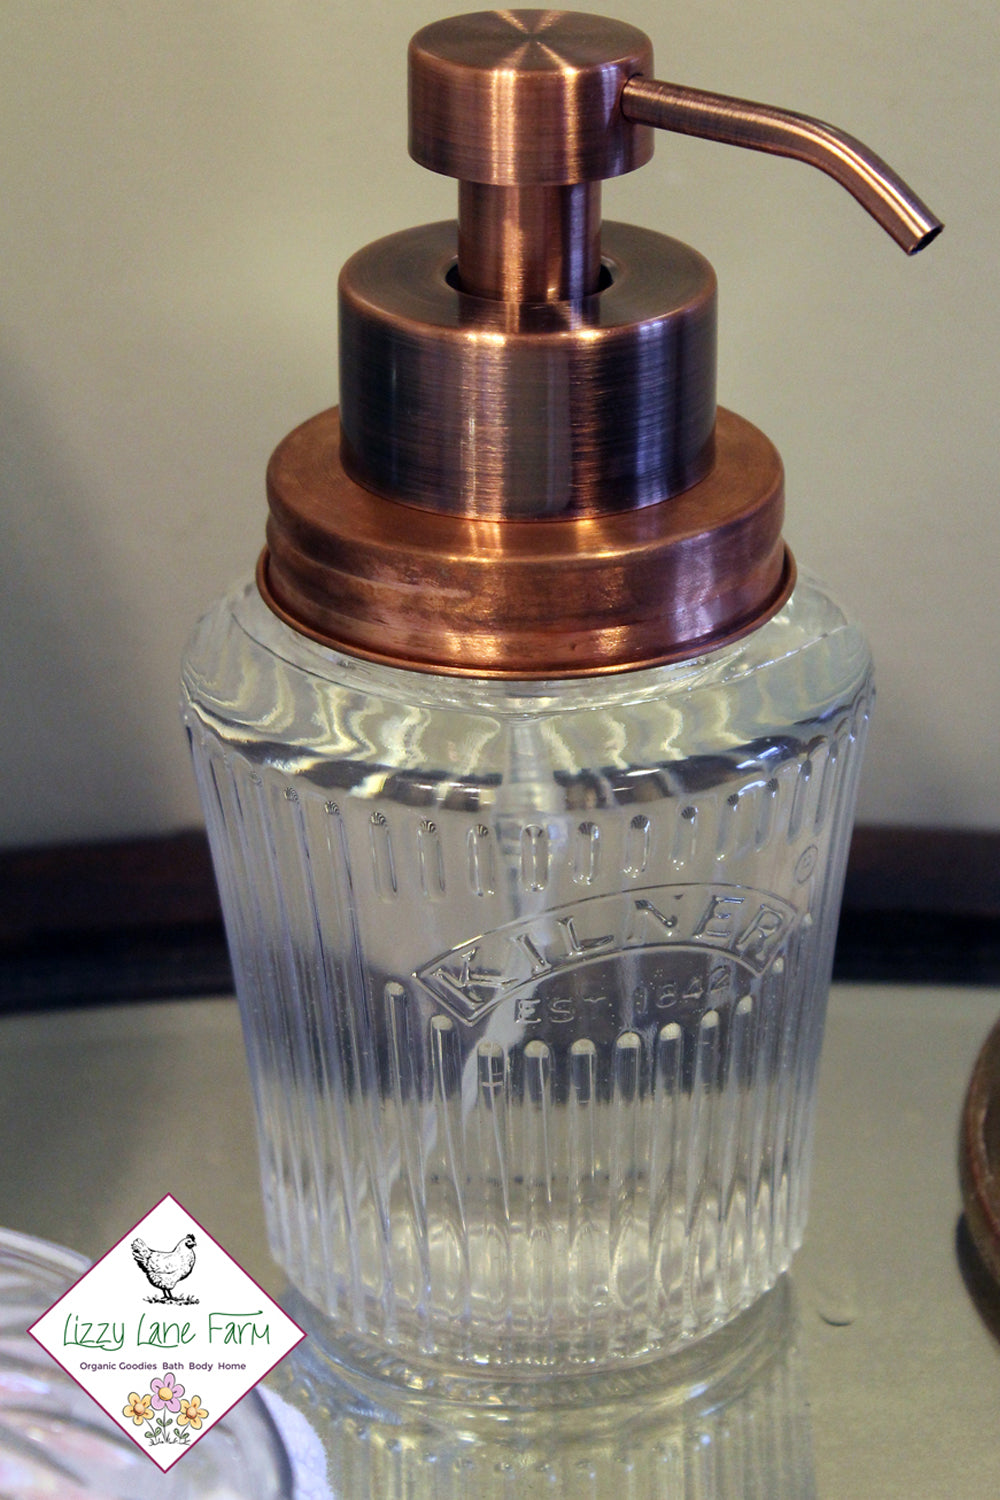 Copper Rust Proof Antique Kilner Jar Soap Dispenser-Soap, Foaming Soap Pump - Lizzy Lane Farm Apothecary